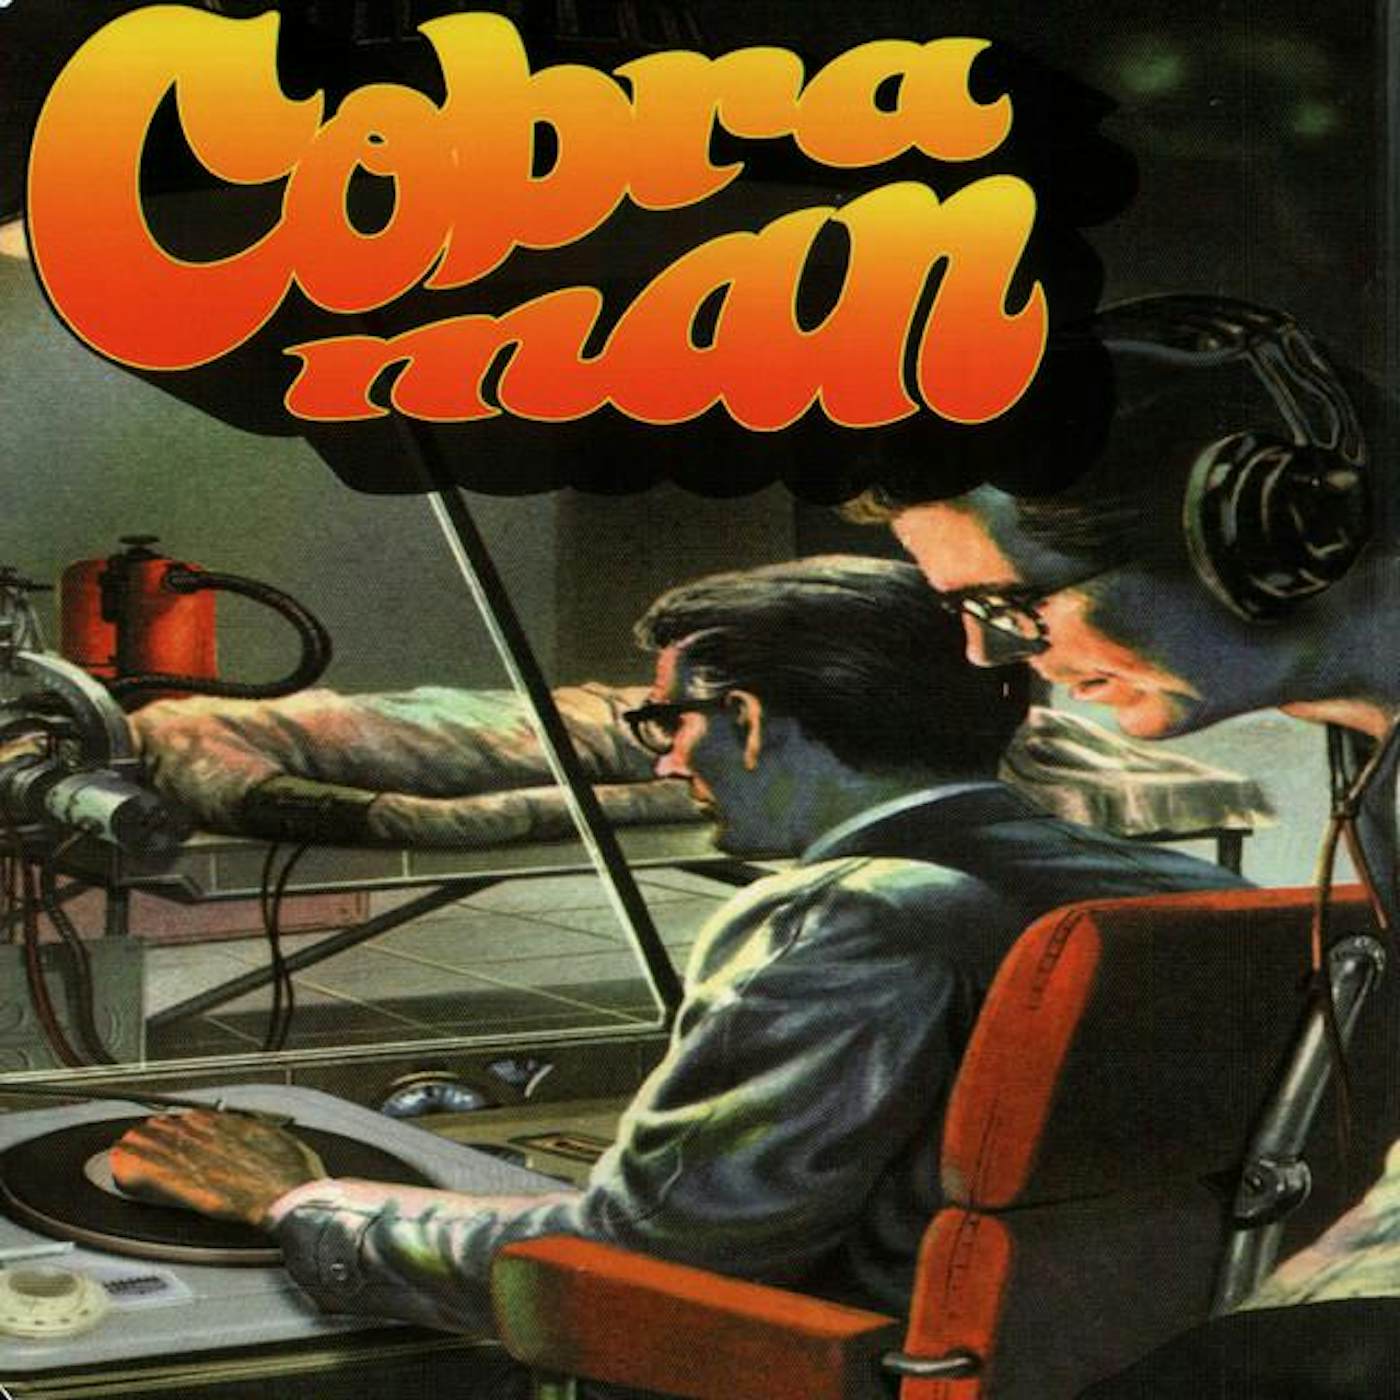 Cobraman